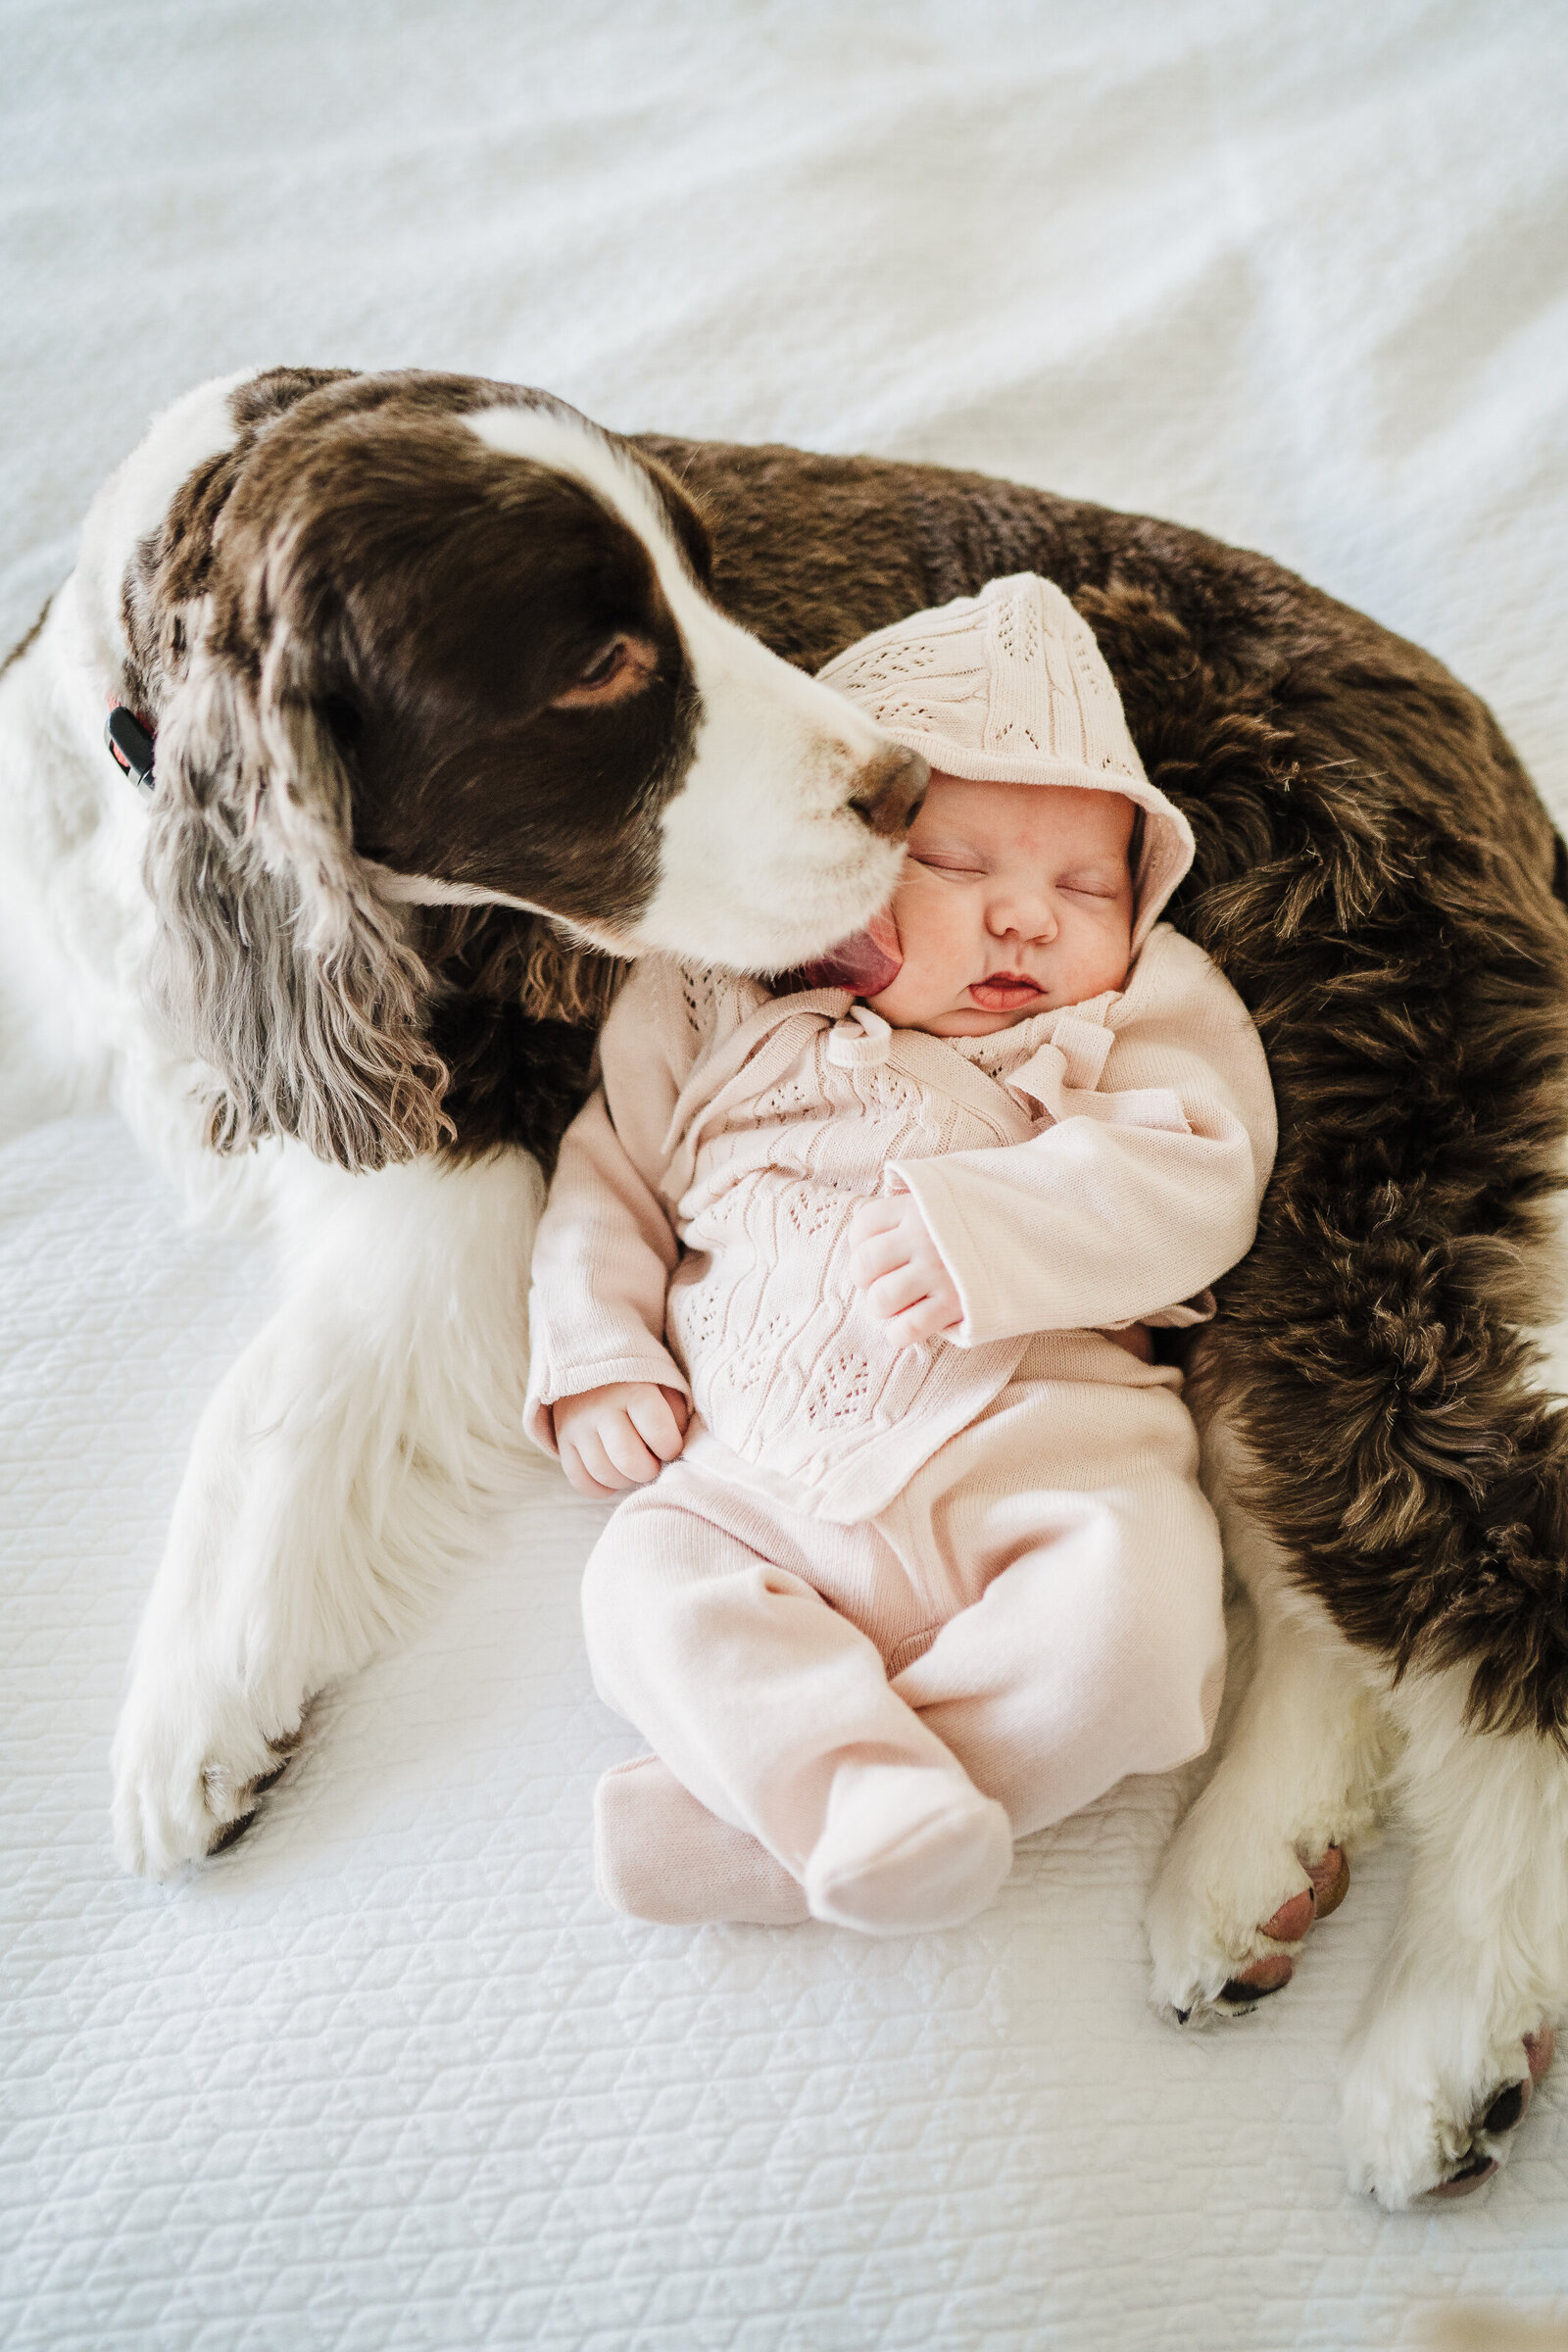 springer spaniel licks cheek of newborn baby girl during boston baby photos